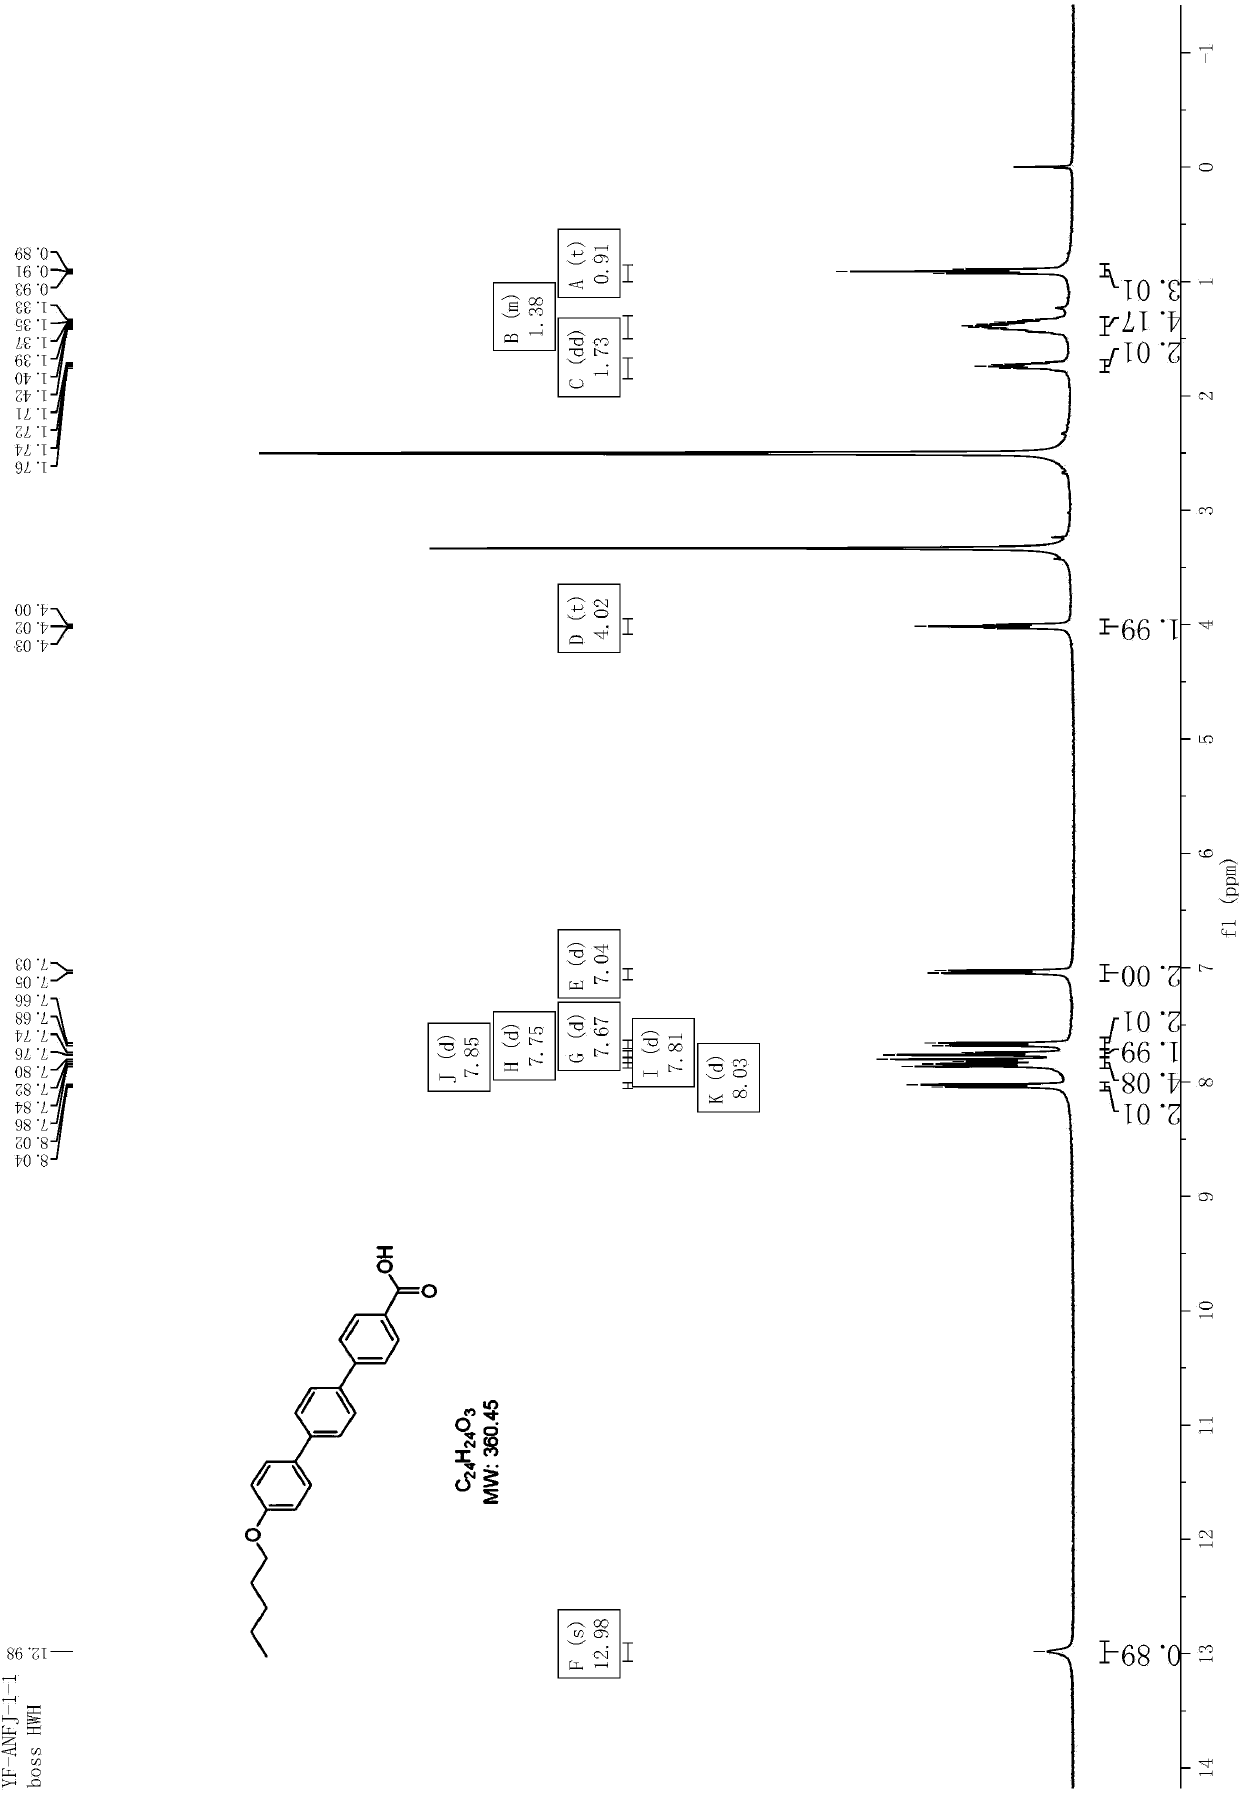 Anidulafungin side chain intermediate 4''-(pentyloxy)-[1,1':4',1''-terphenyl]-4-carboxylic acid